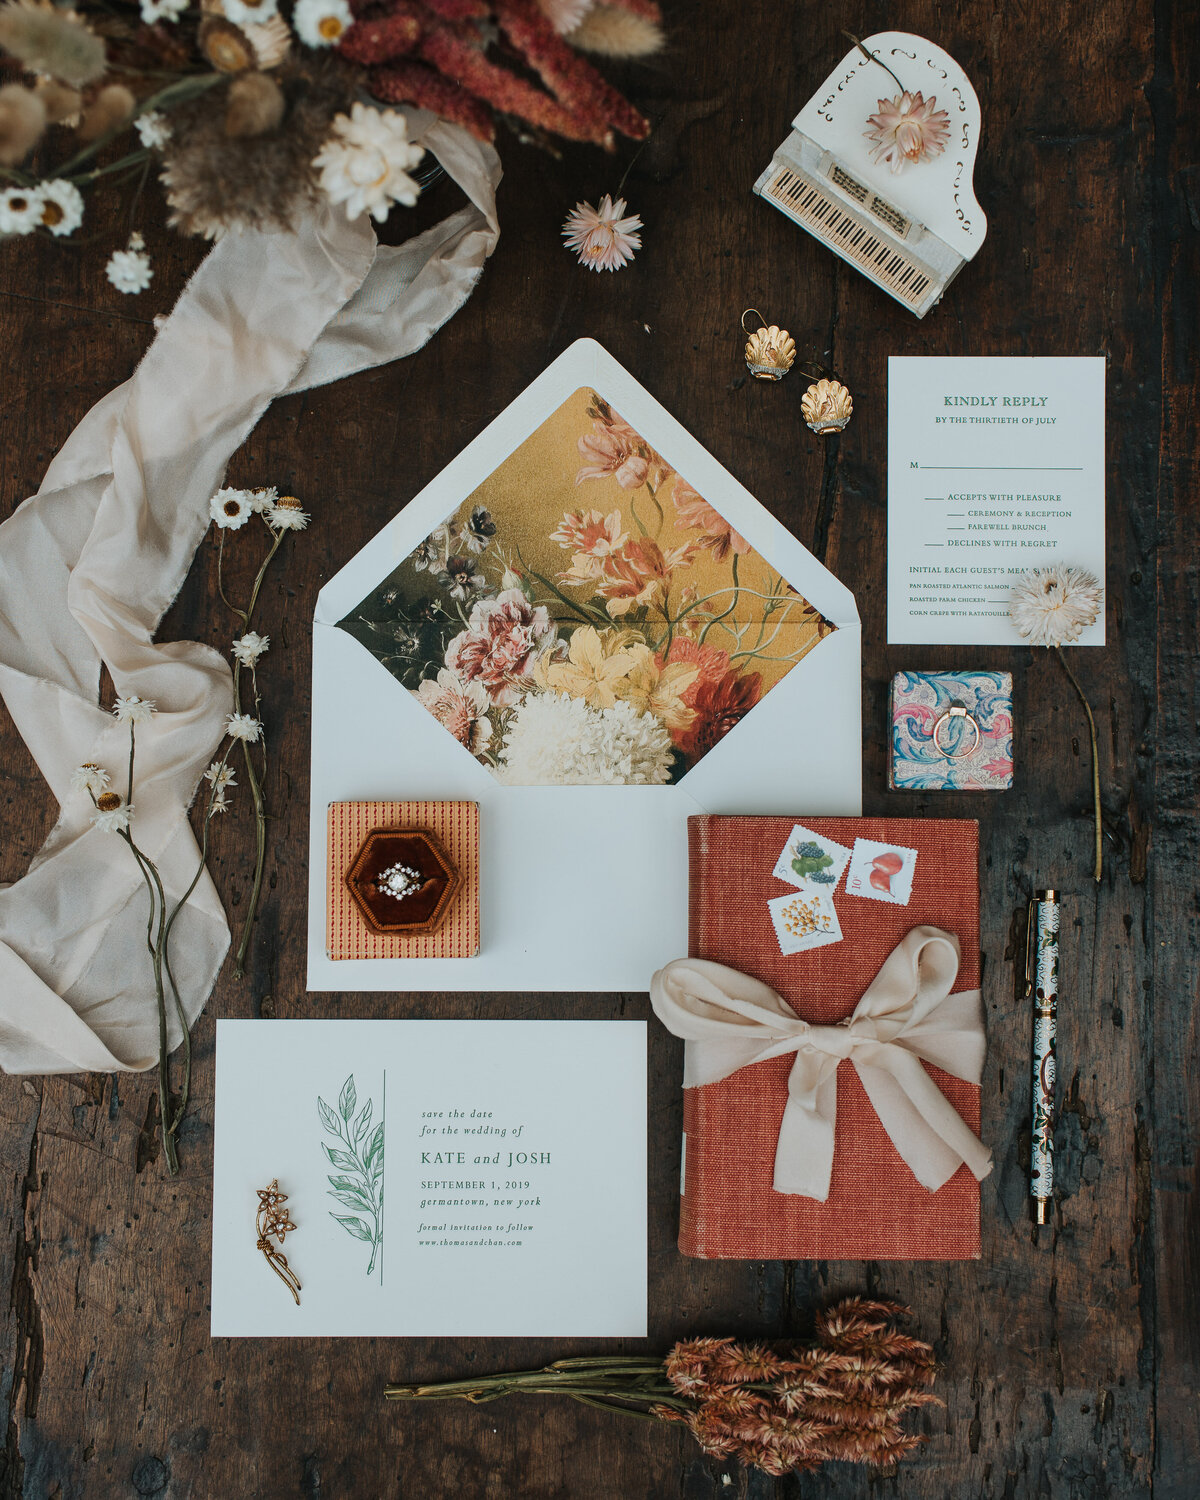 Luxury fall wedding invitation with bespoke letterpress design.